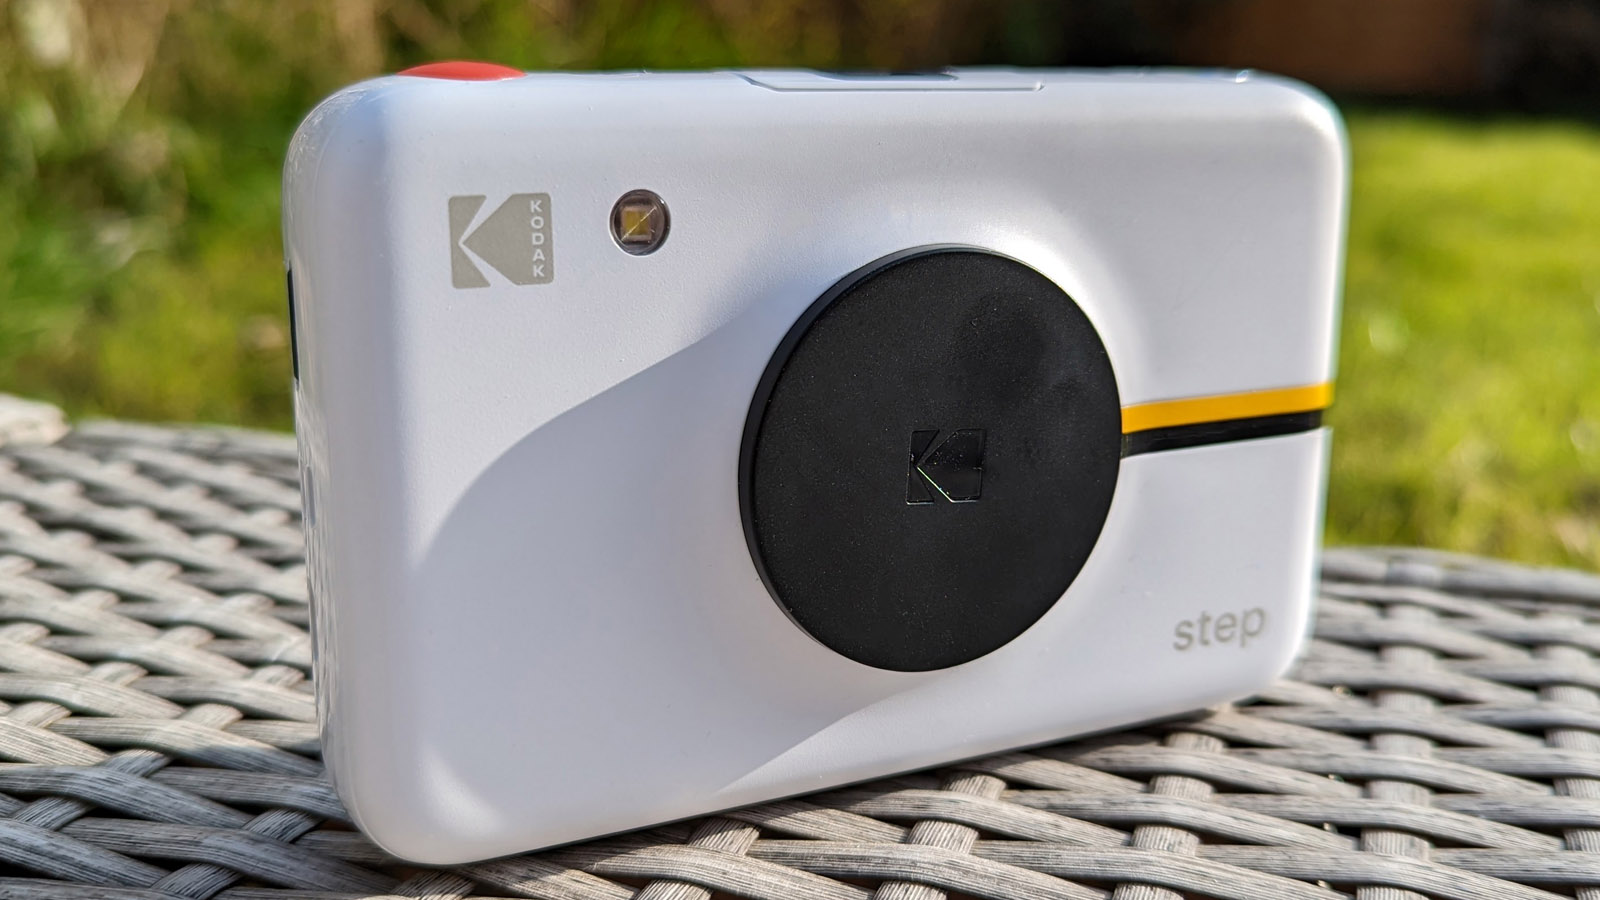 Kodak Step Digital Instant Camera with 10MP Image Sensor, ZINK